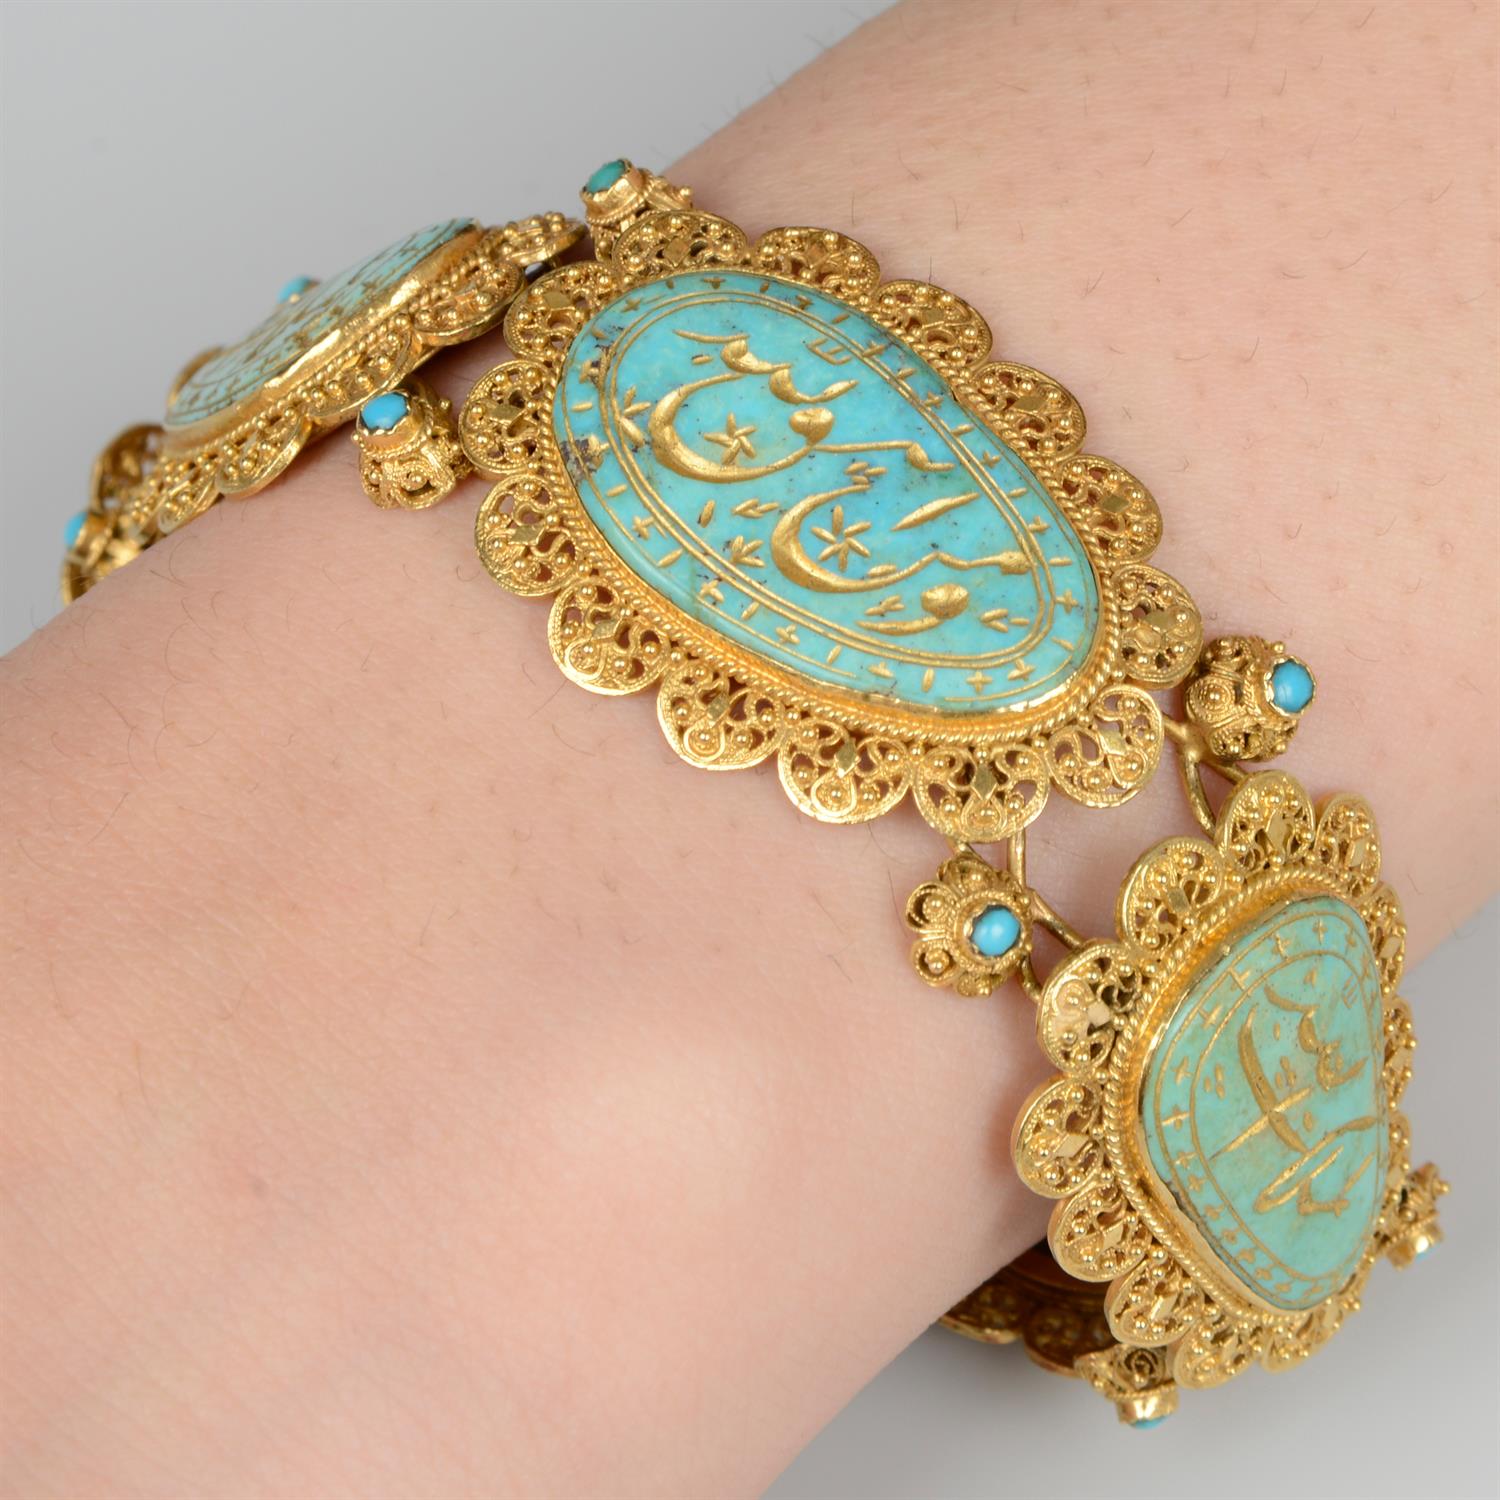 Carved turquoise bracelet